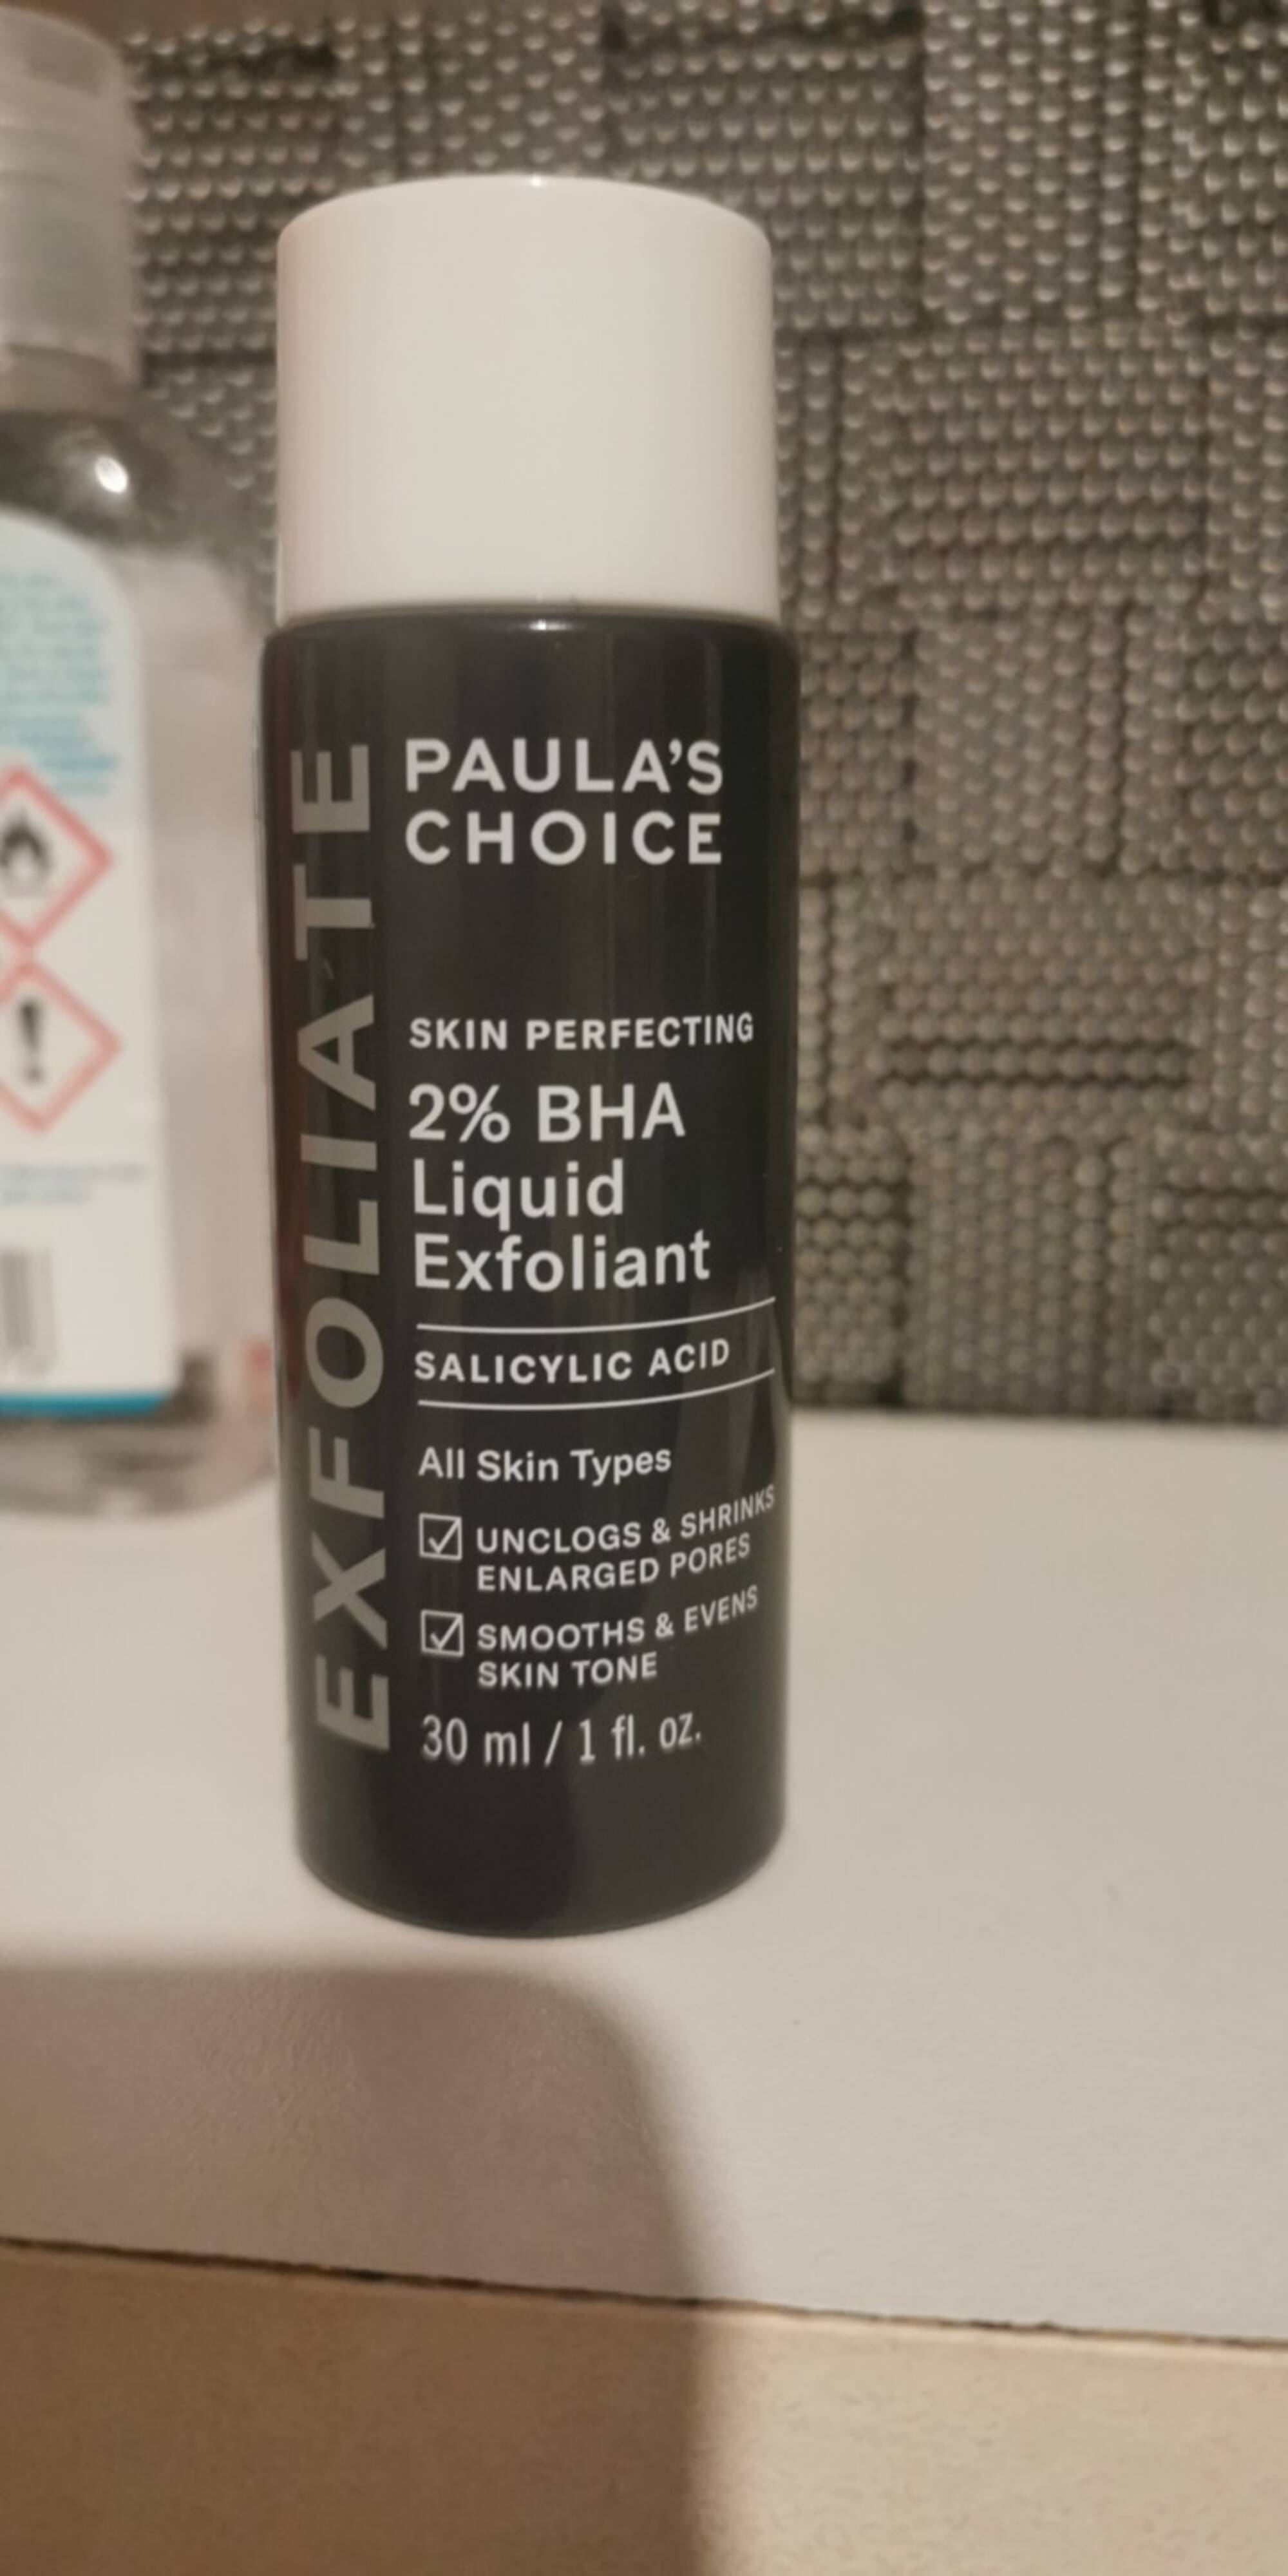 PAULA'S CHOICE - Skin perfecting 2% BHA - Liquid Exfoliant